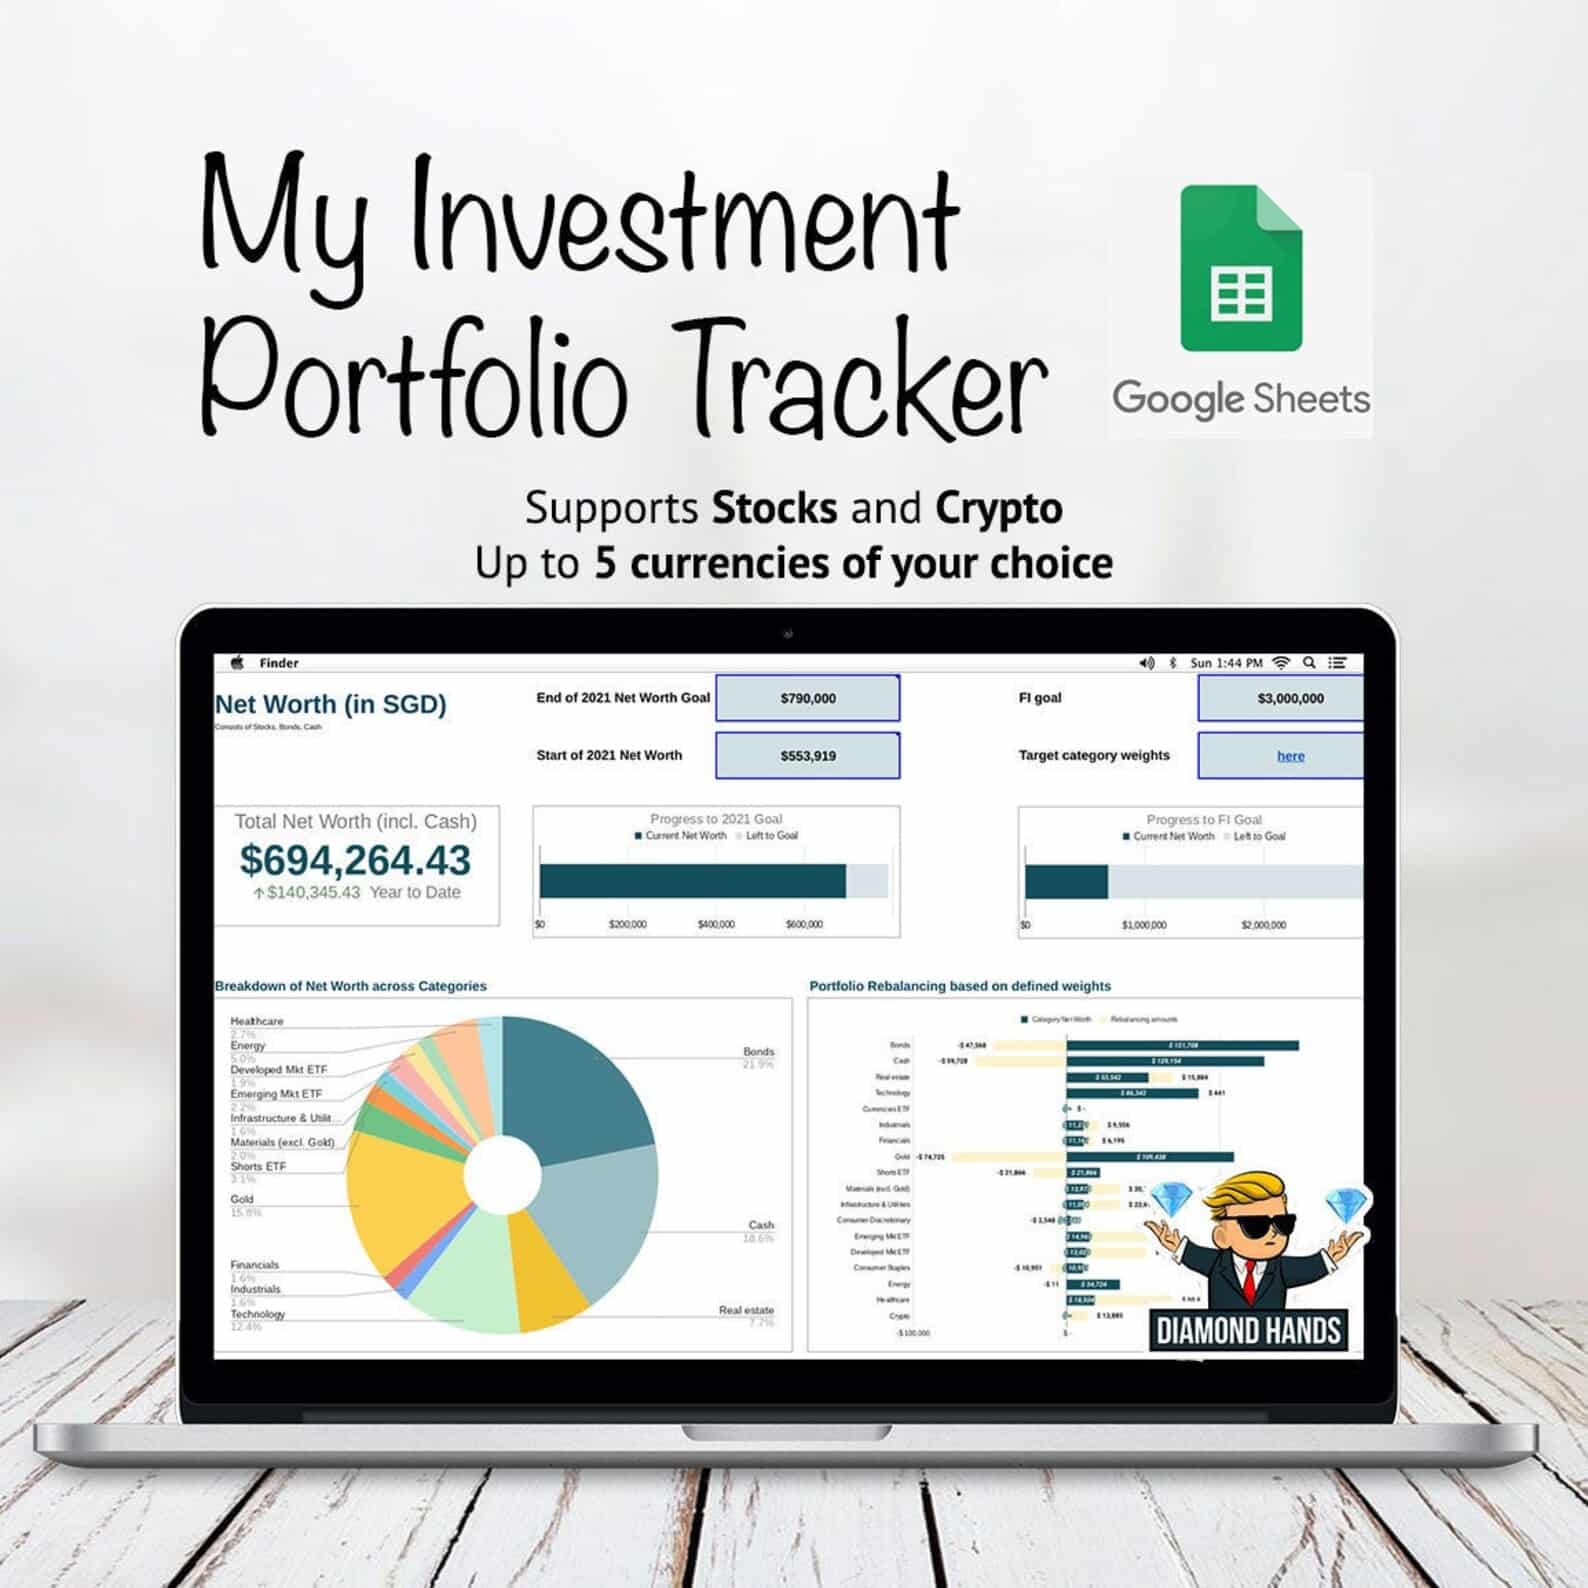 Stocks and Crypto Investment Portfolio Tracker Google Sheets